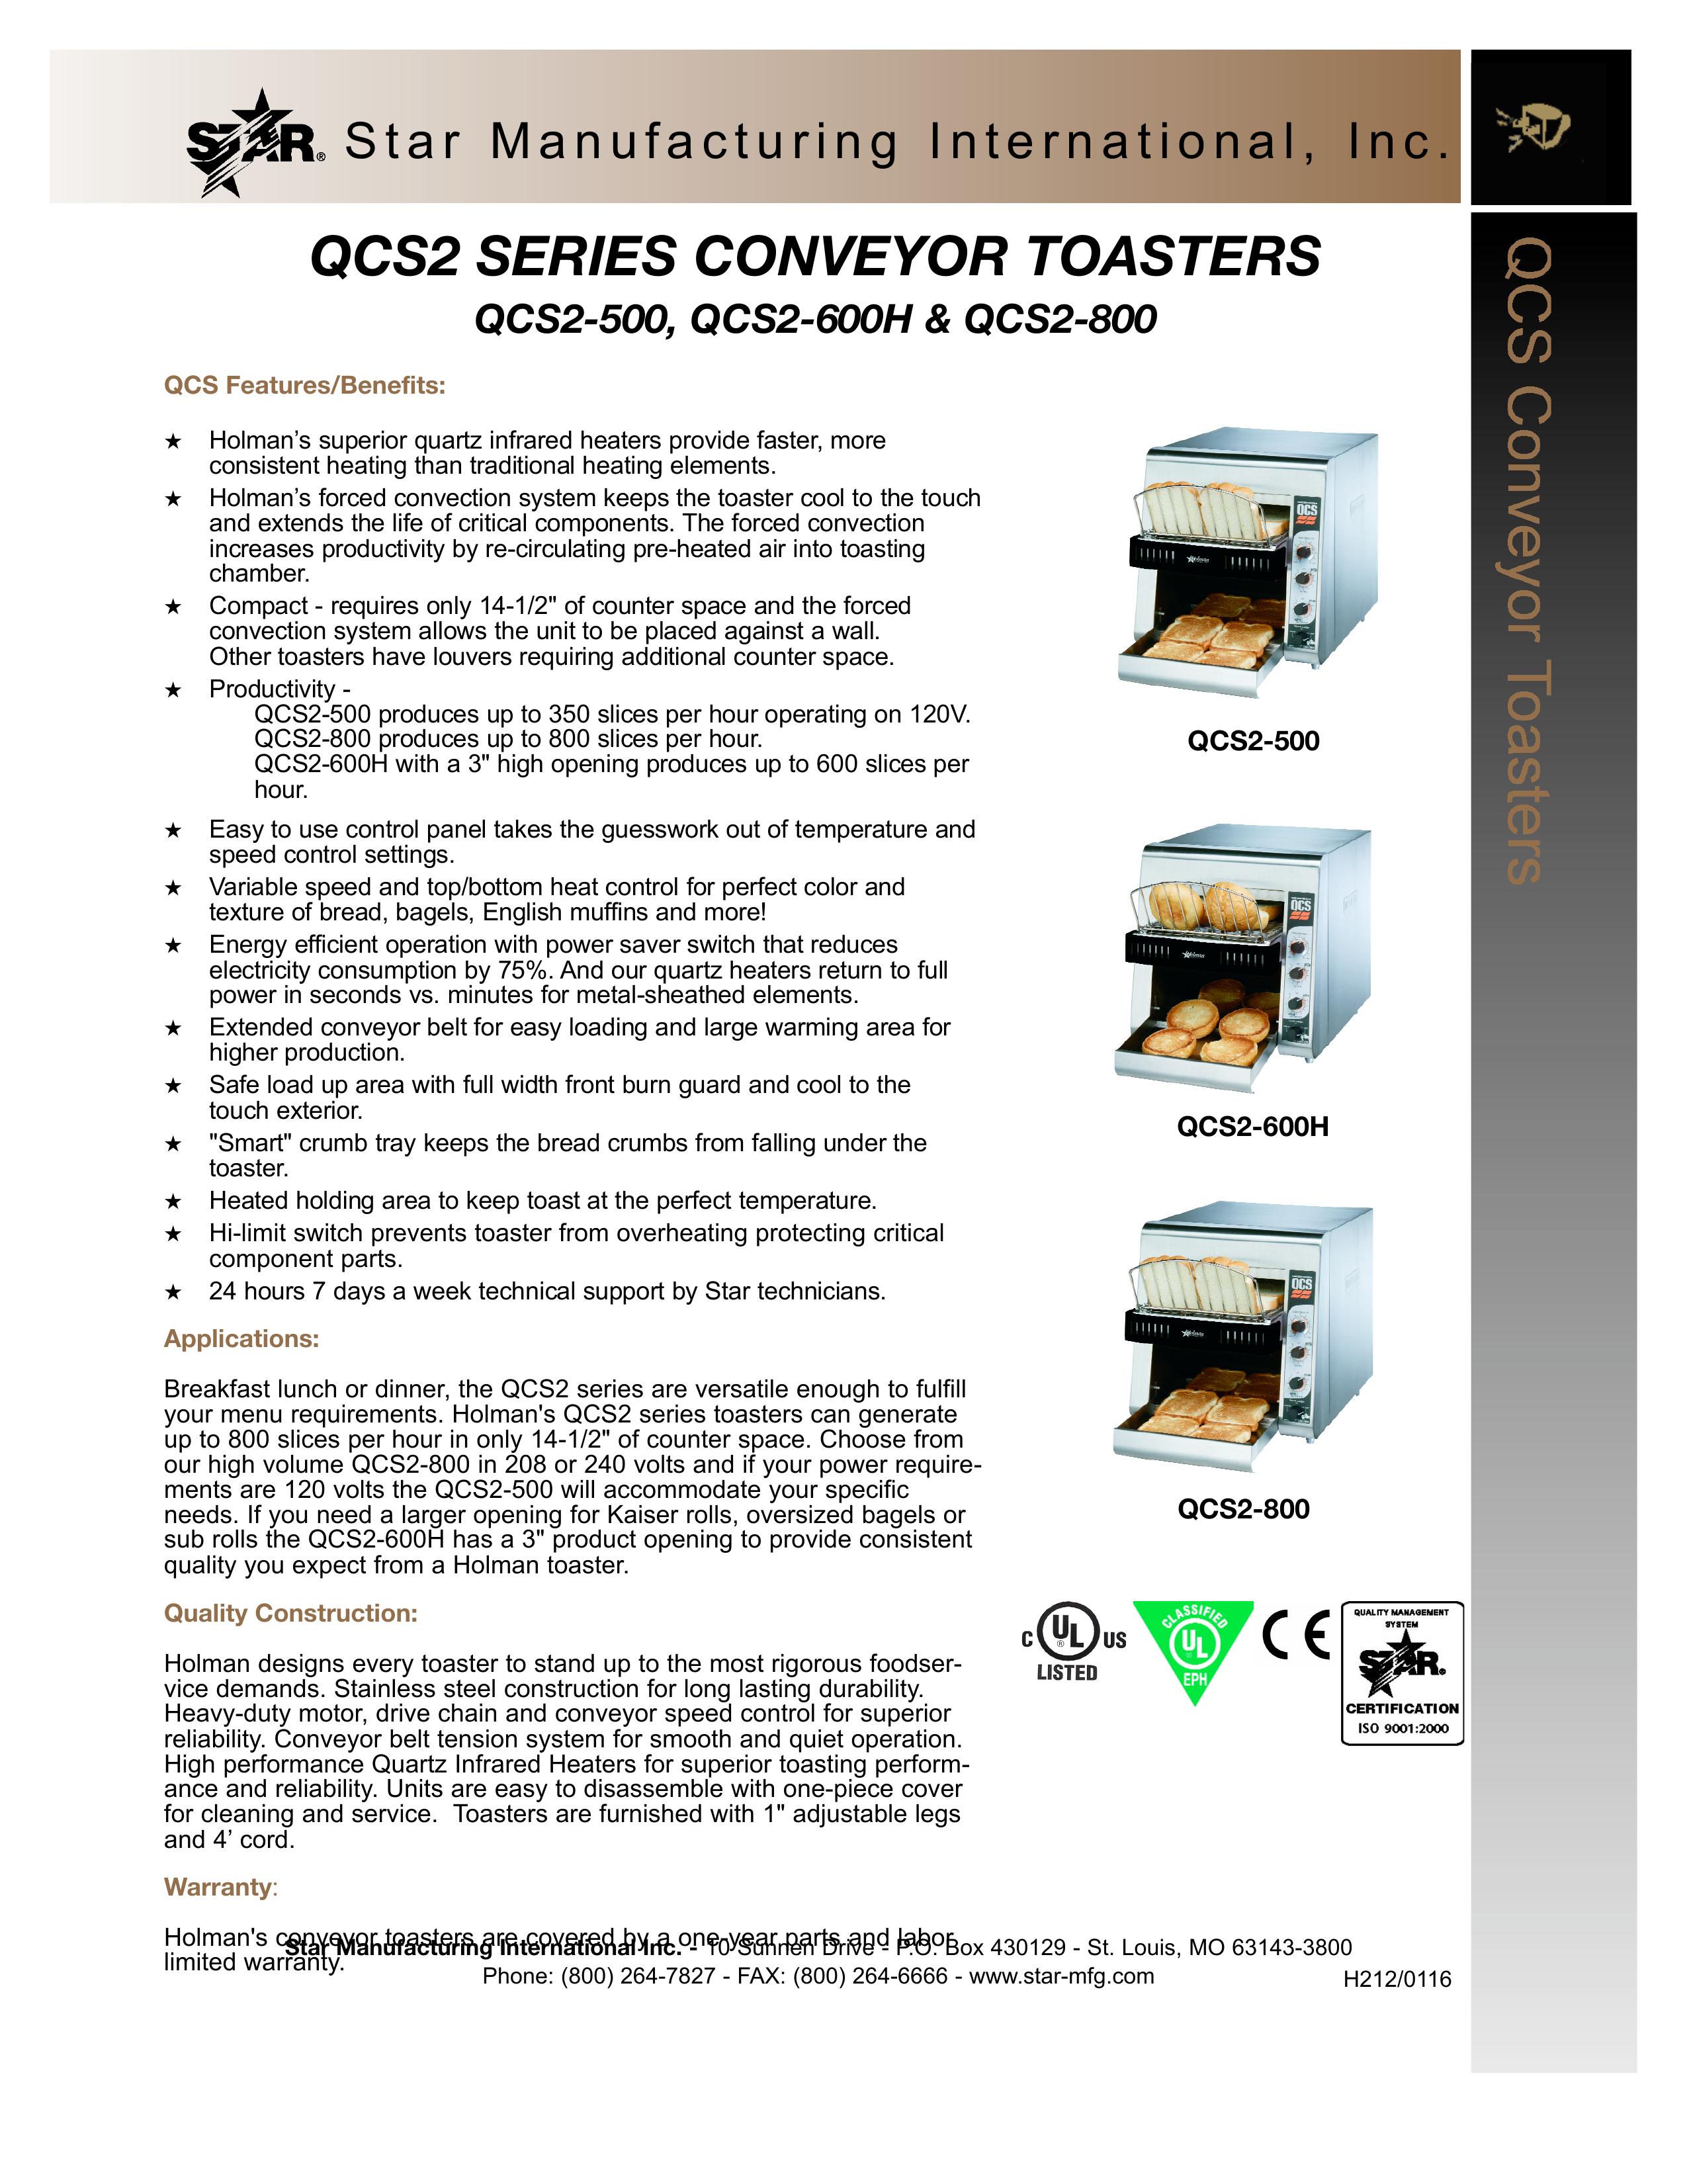 Star Manufacturing QCS2-500 Toaster User Manual